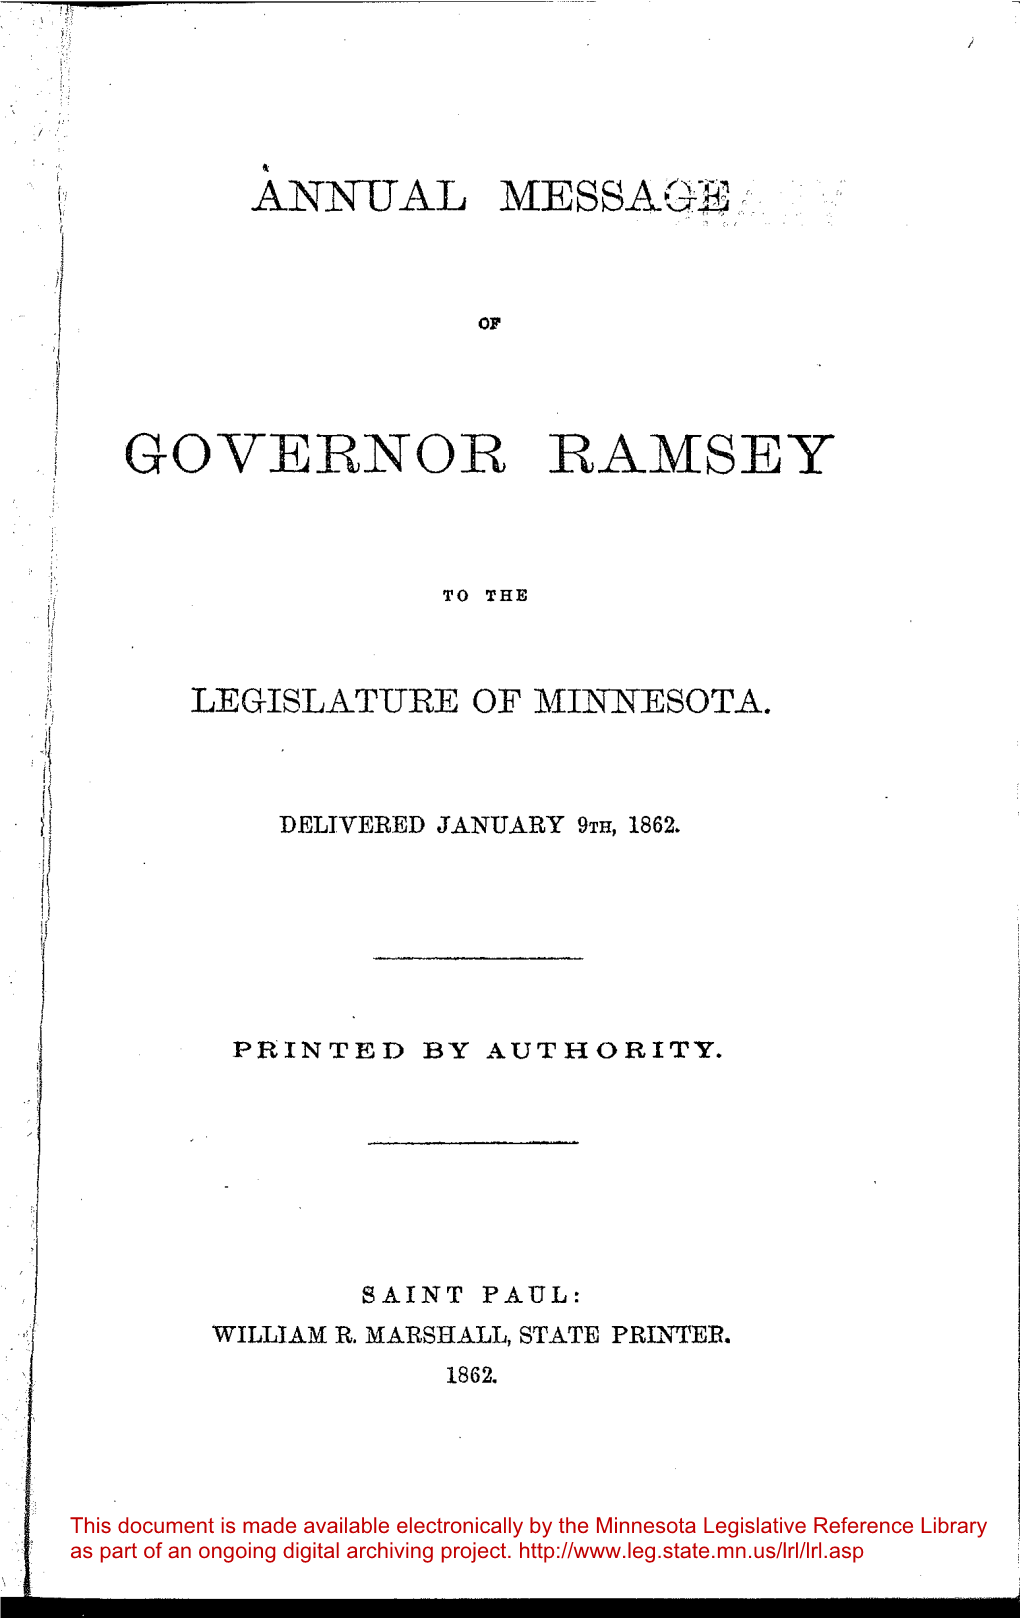 Governor Ramsey